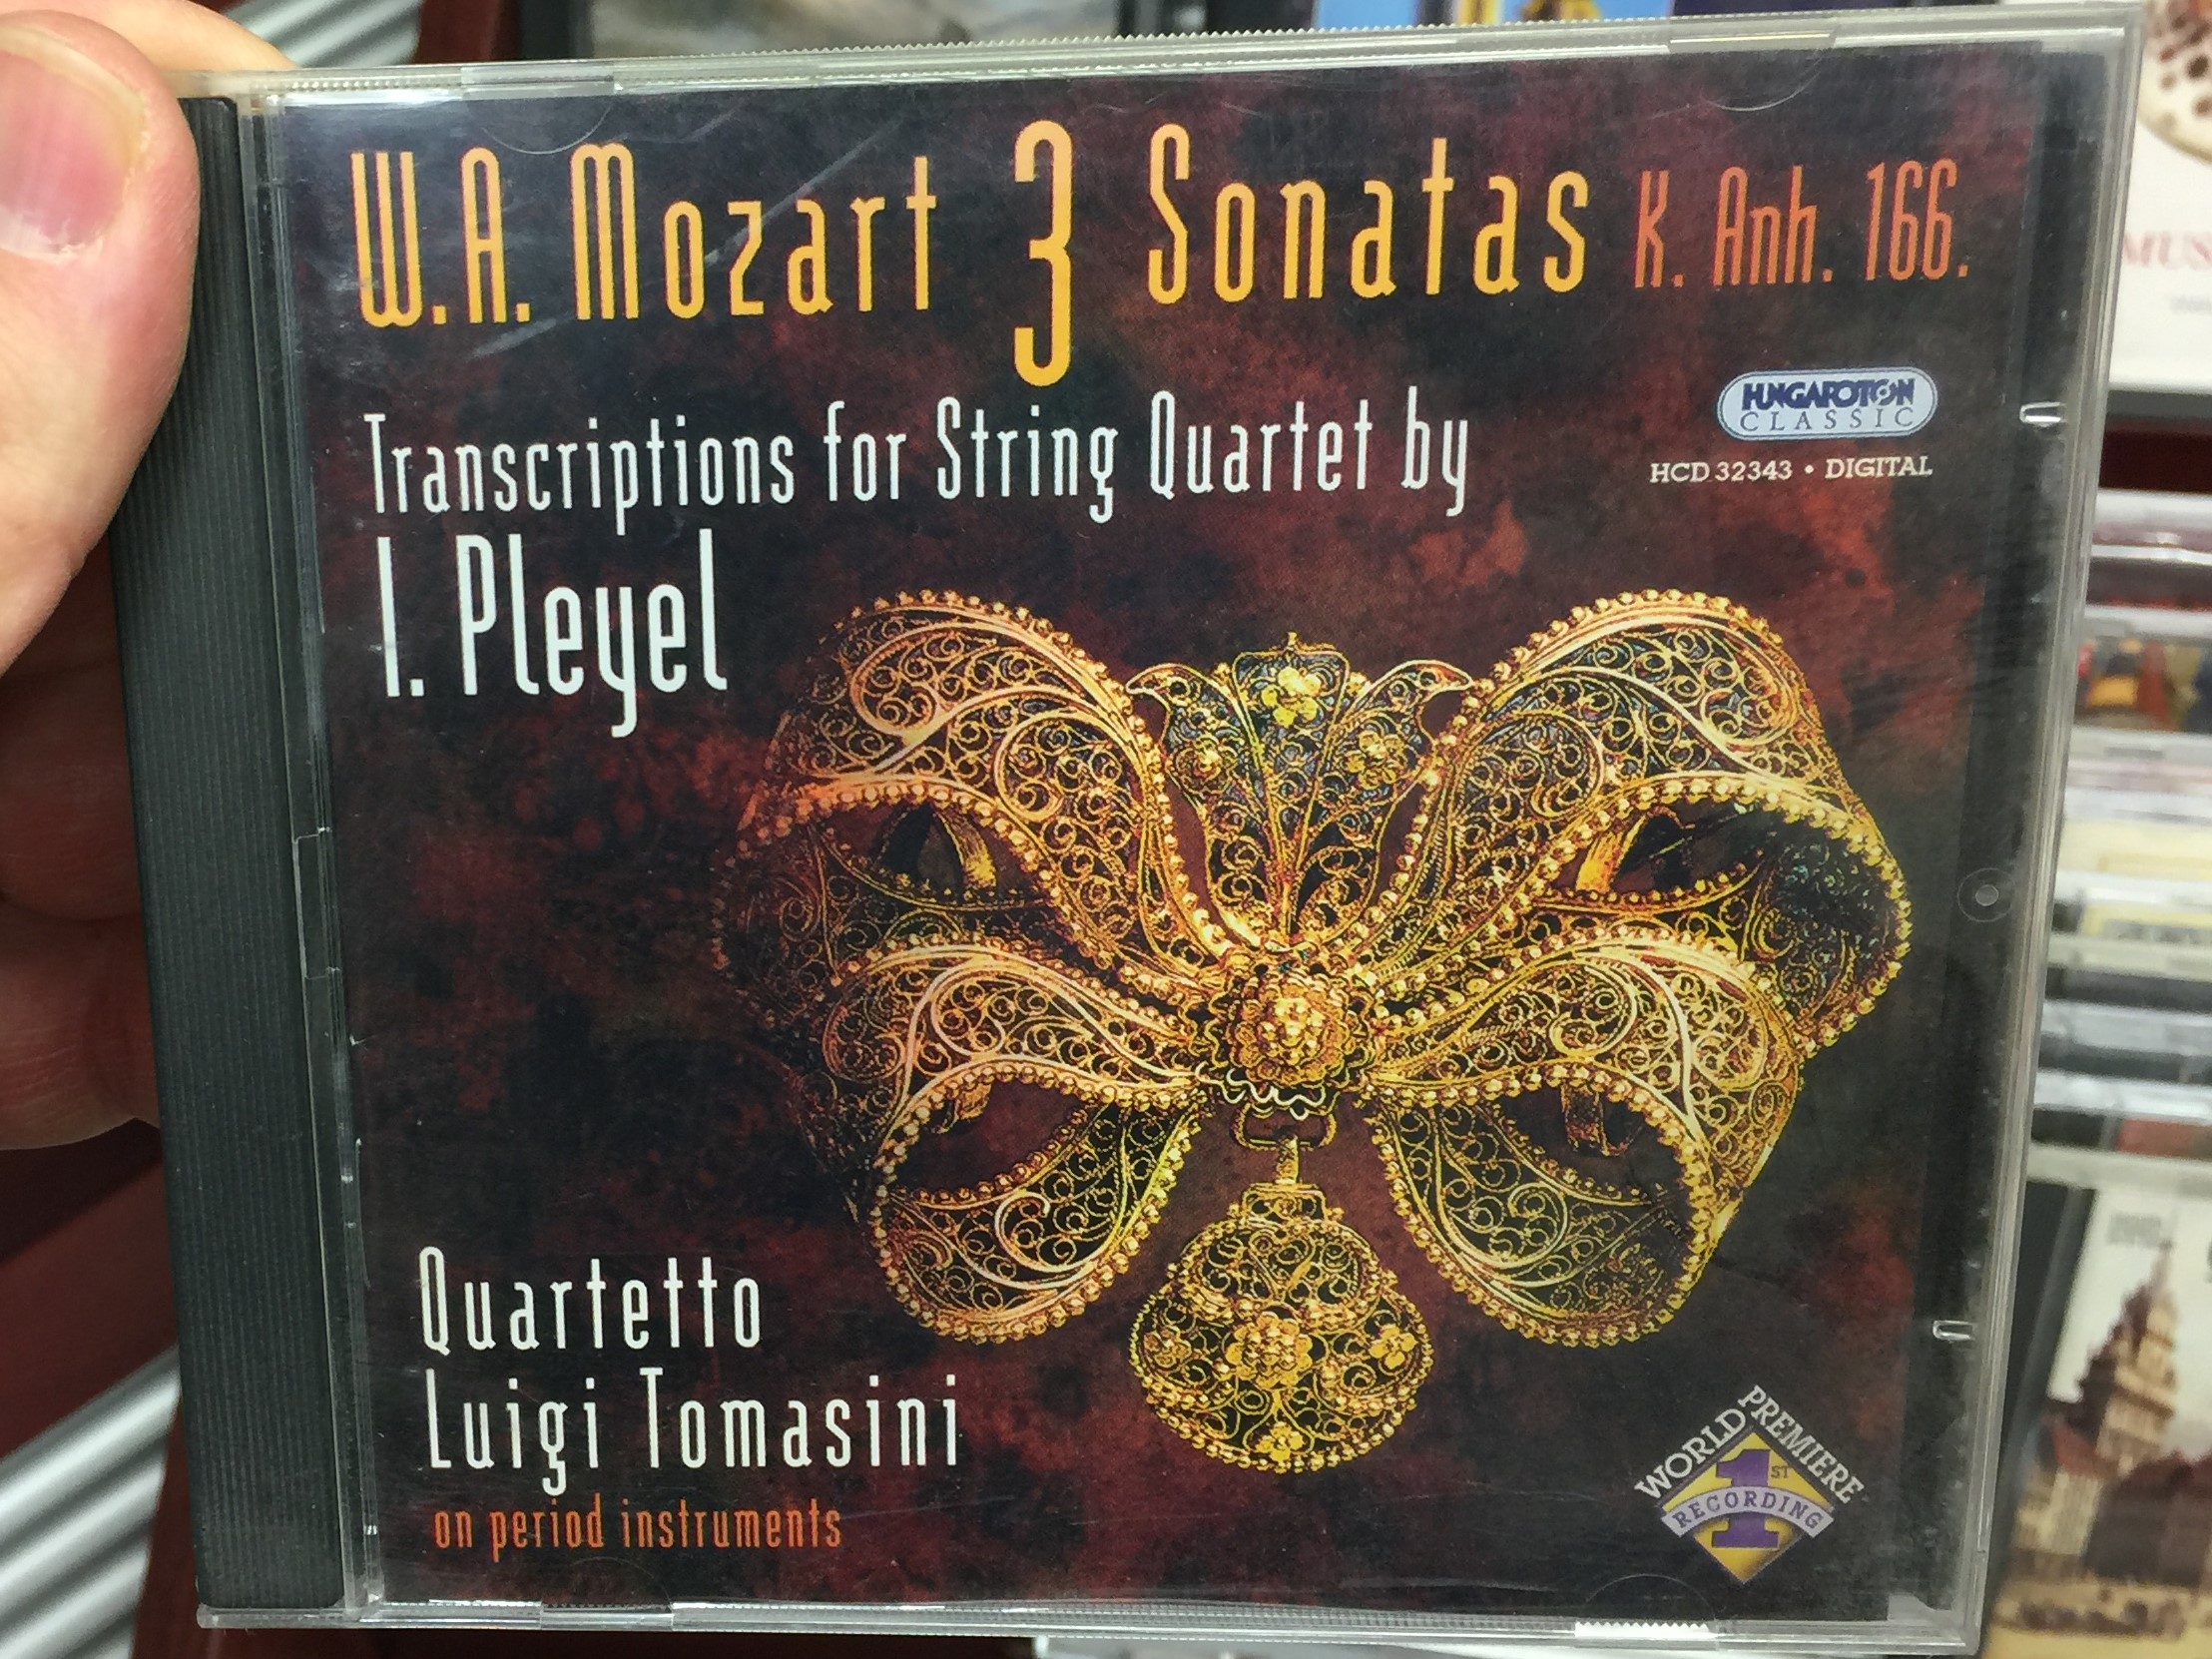 w.-a.-mozart-3-sonatas-k.-anh.-166.-transcriptions-for-string-quartet-by-i.-pleyel-quartetto-luigi-tomasini-on-period-instruments-hungaroton-classic-audio-cd-2005-stereo-hcd-32343-1-.jpg